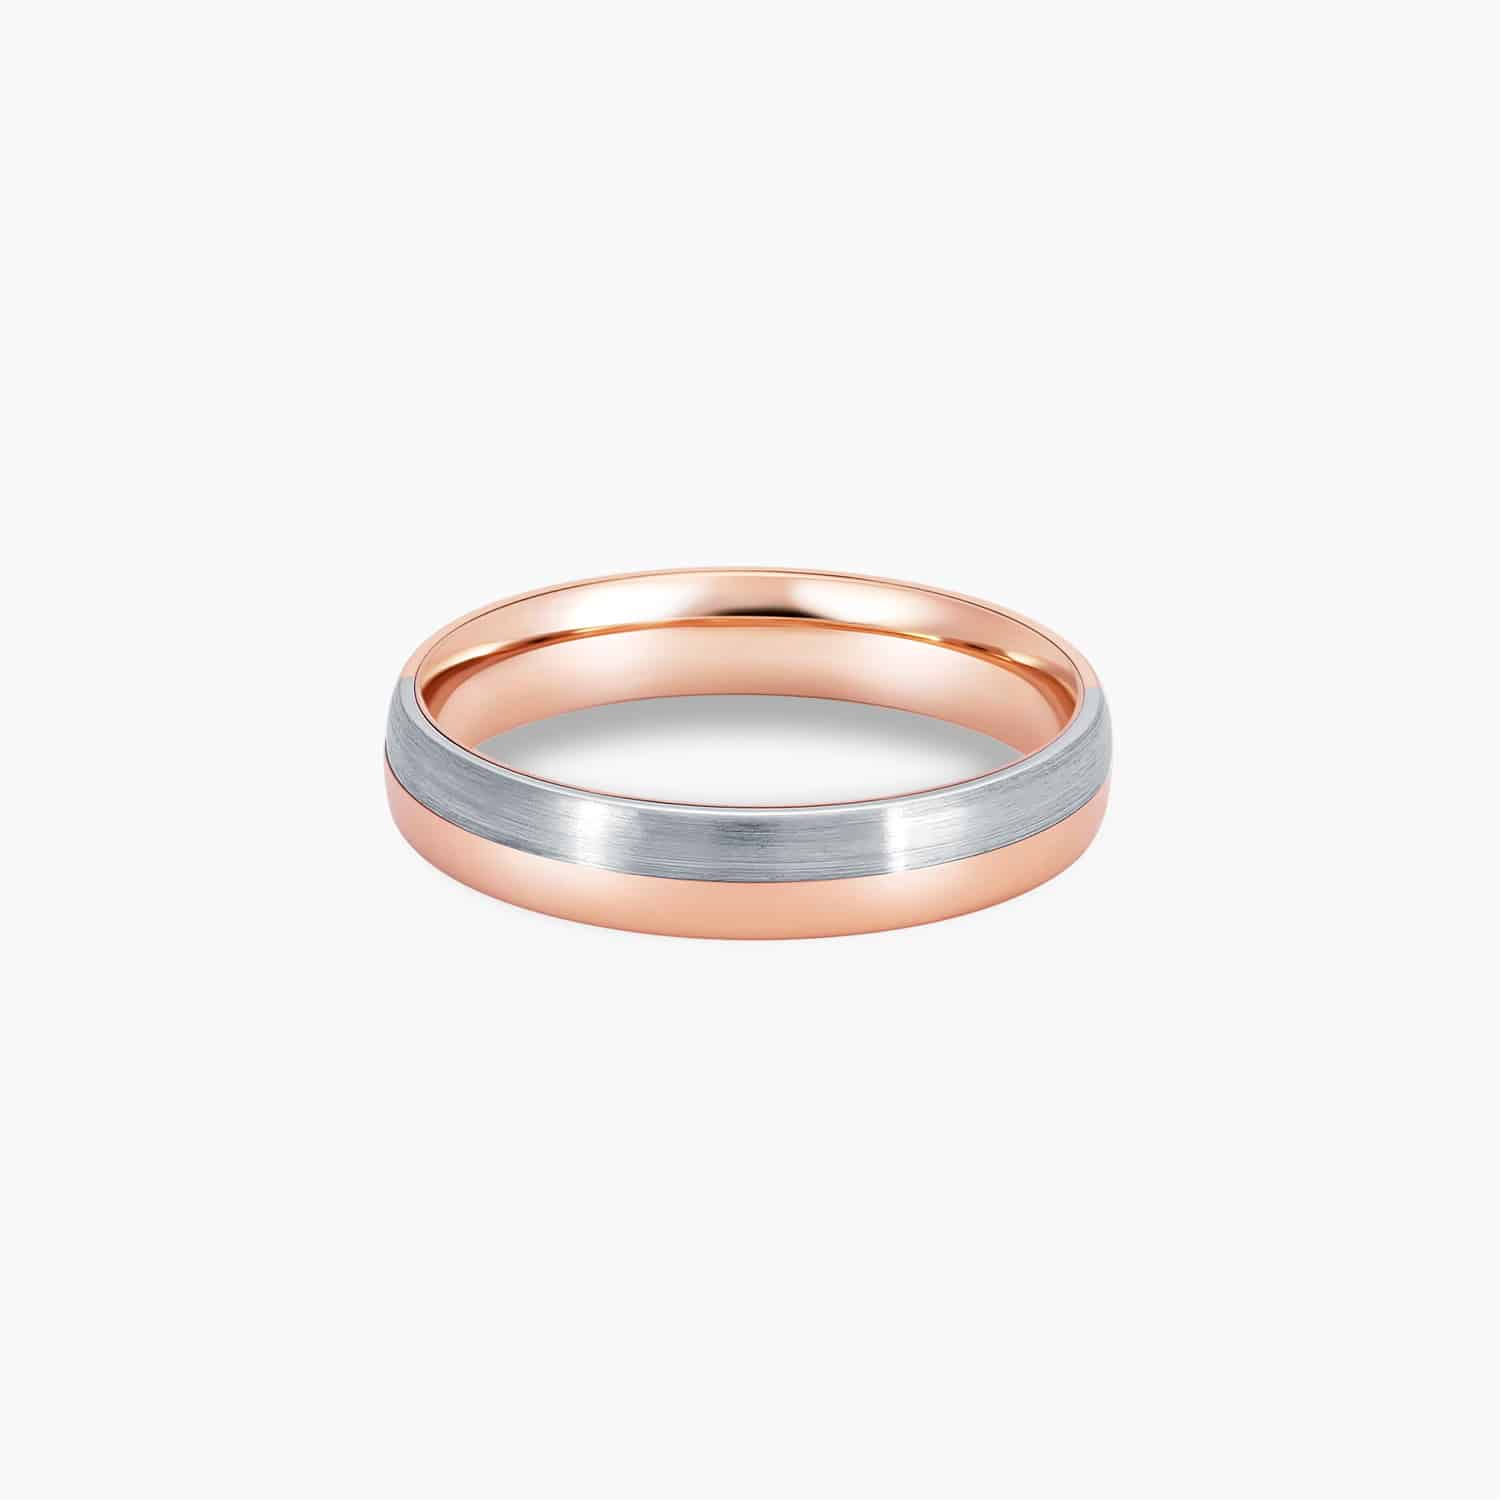 LVC Desirio Dawn Wedding Ring for Men in White and Rose Gold